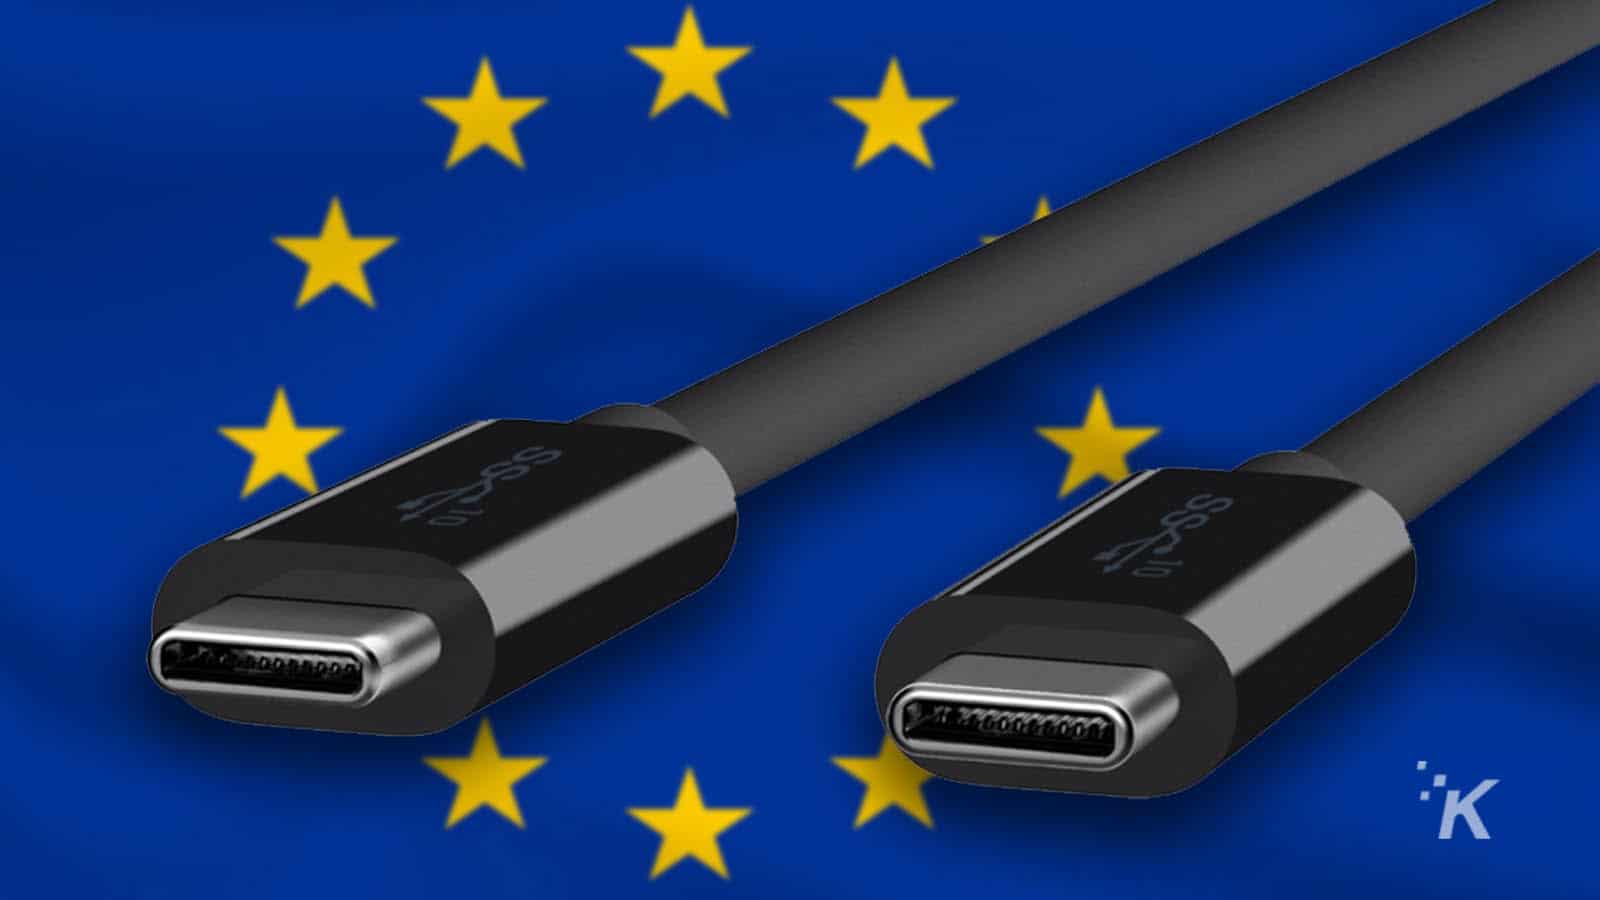 usb-c cables on eu flag